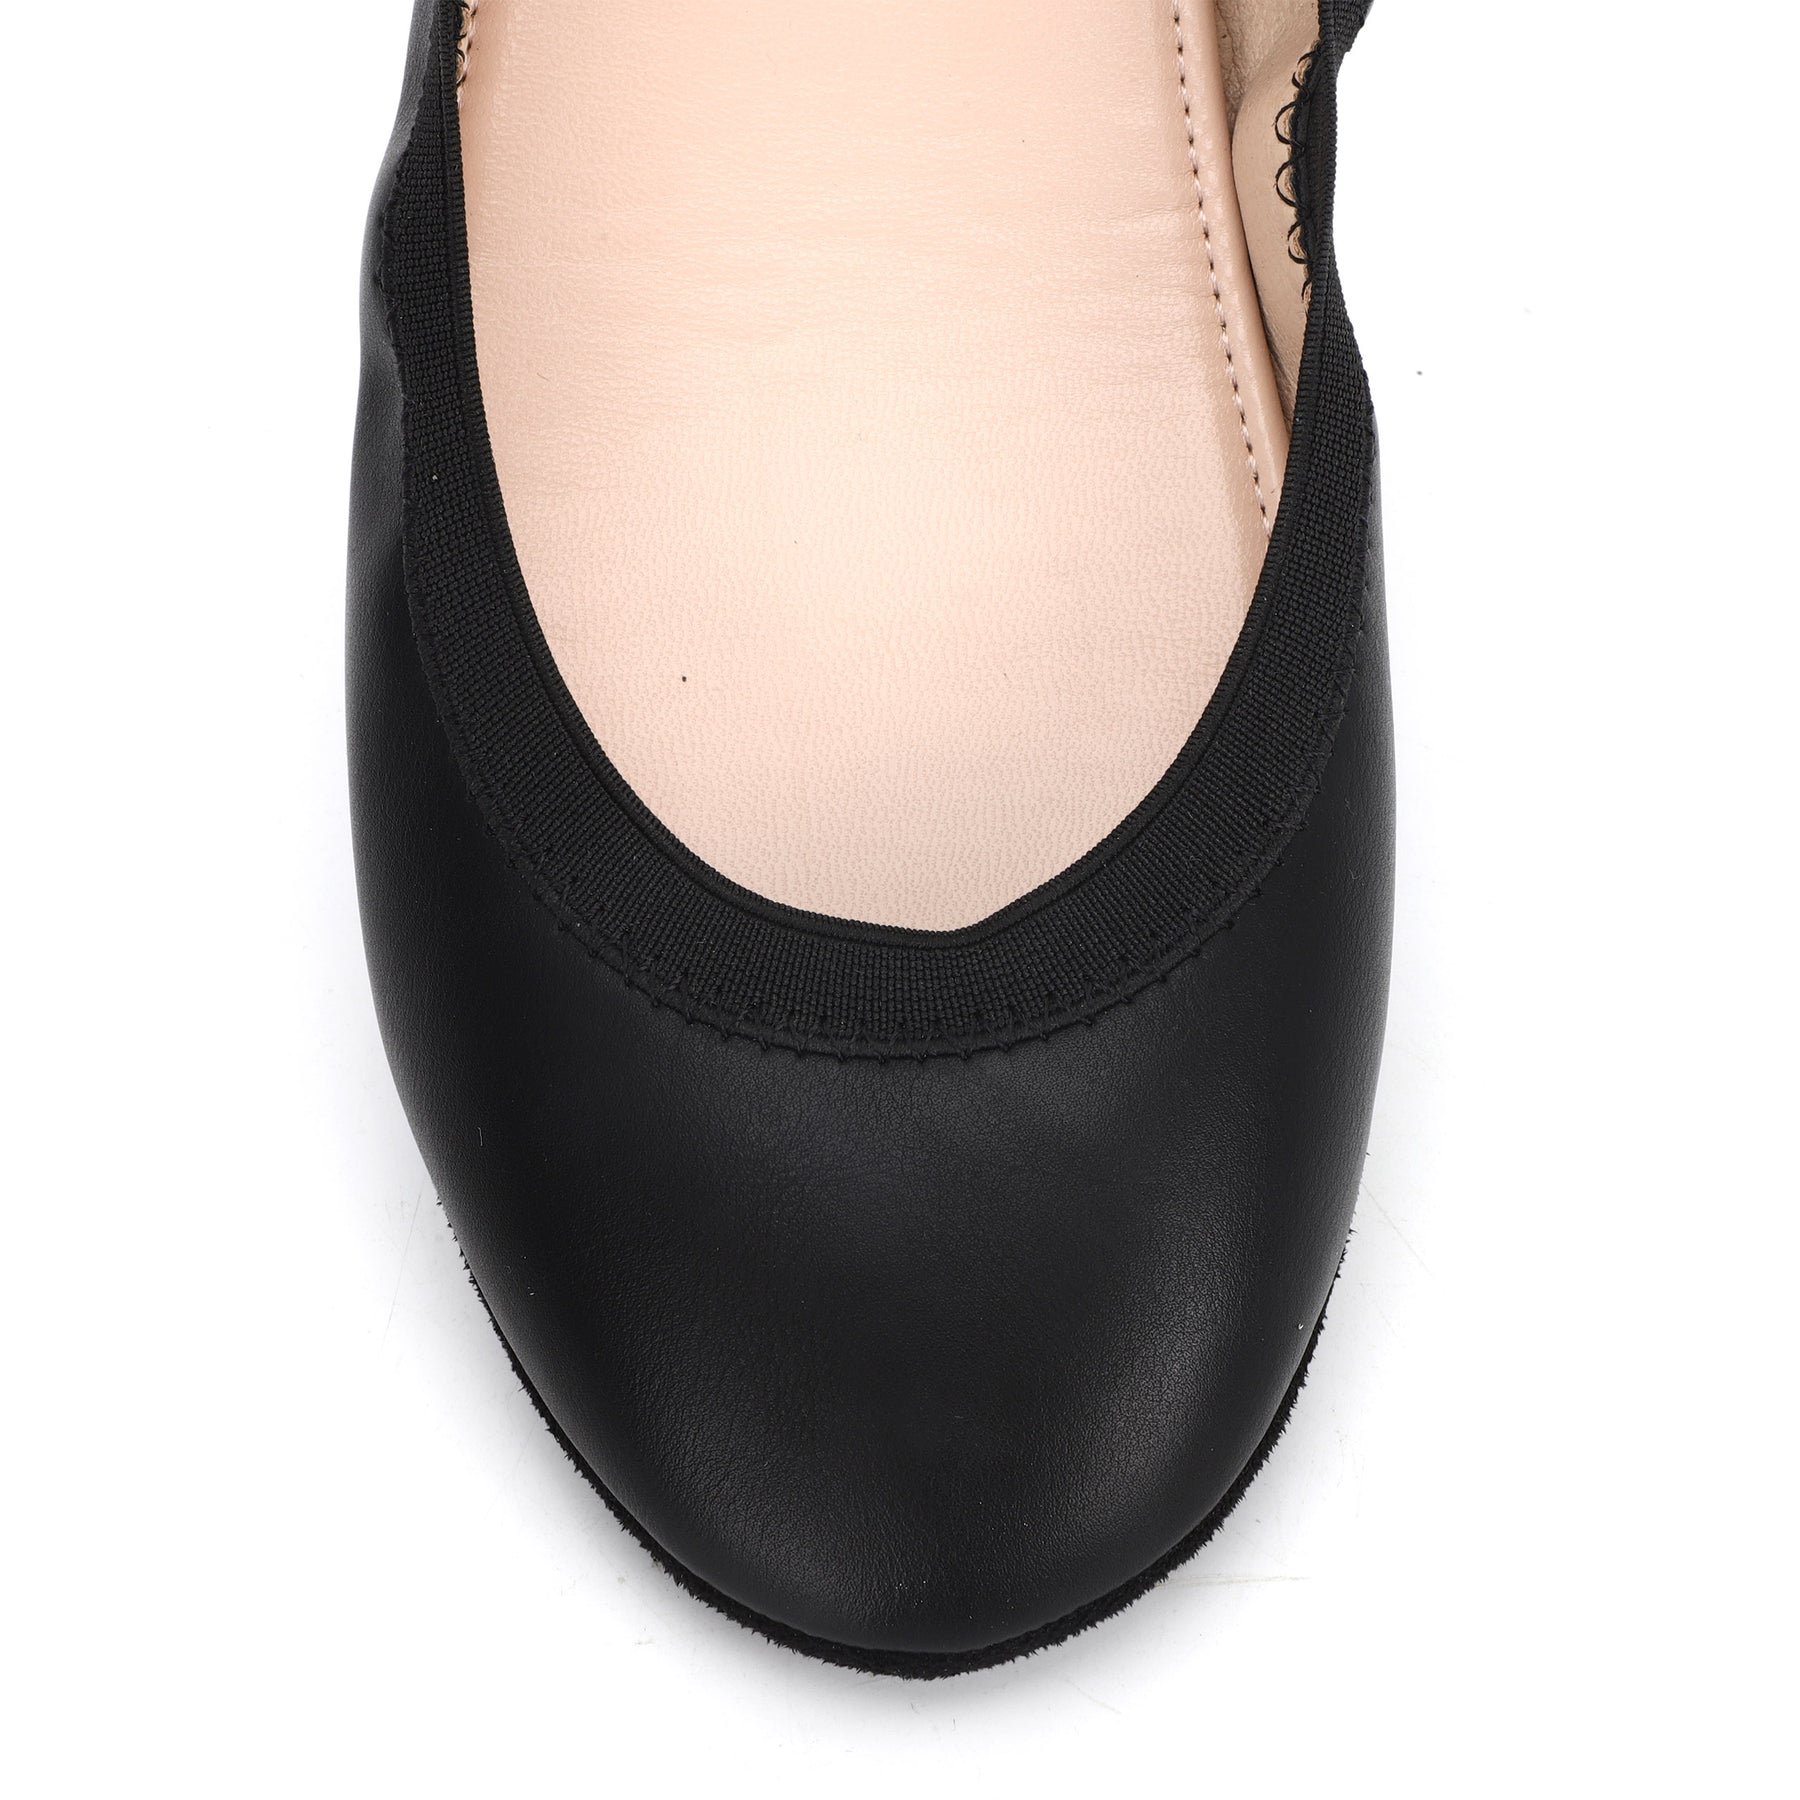 Nina Foldable Ballet Flat in Black PETA-Approved Vegan Leather